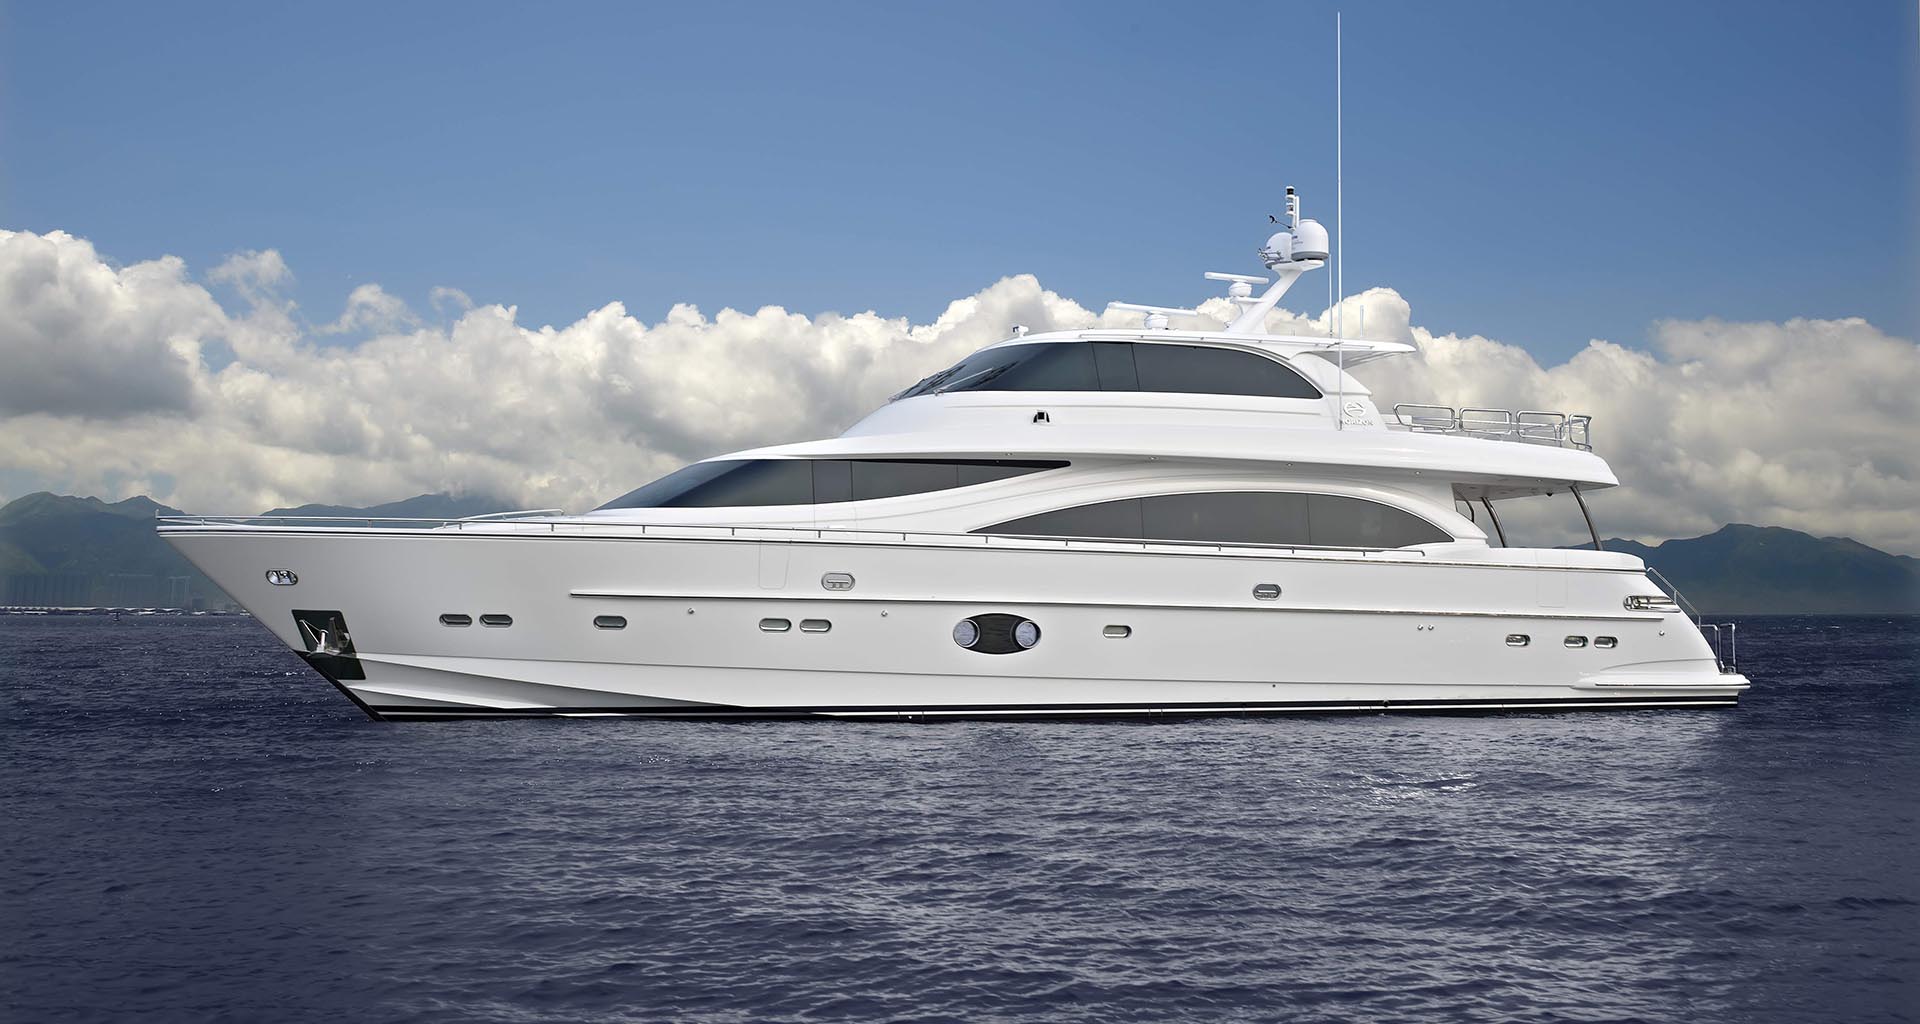 Diamond Seas Luxury Yacht - Giants Enterprises